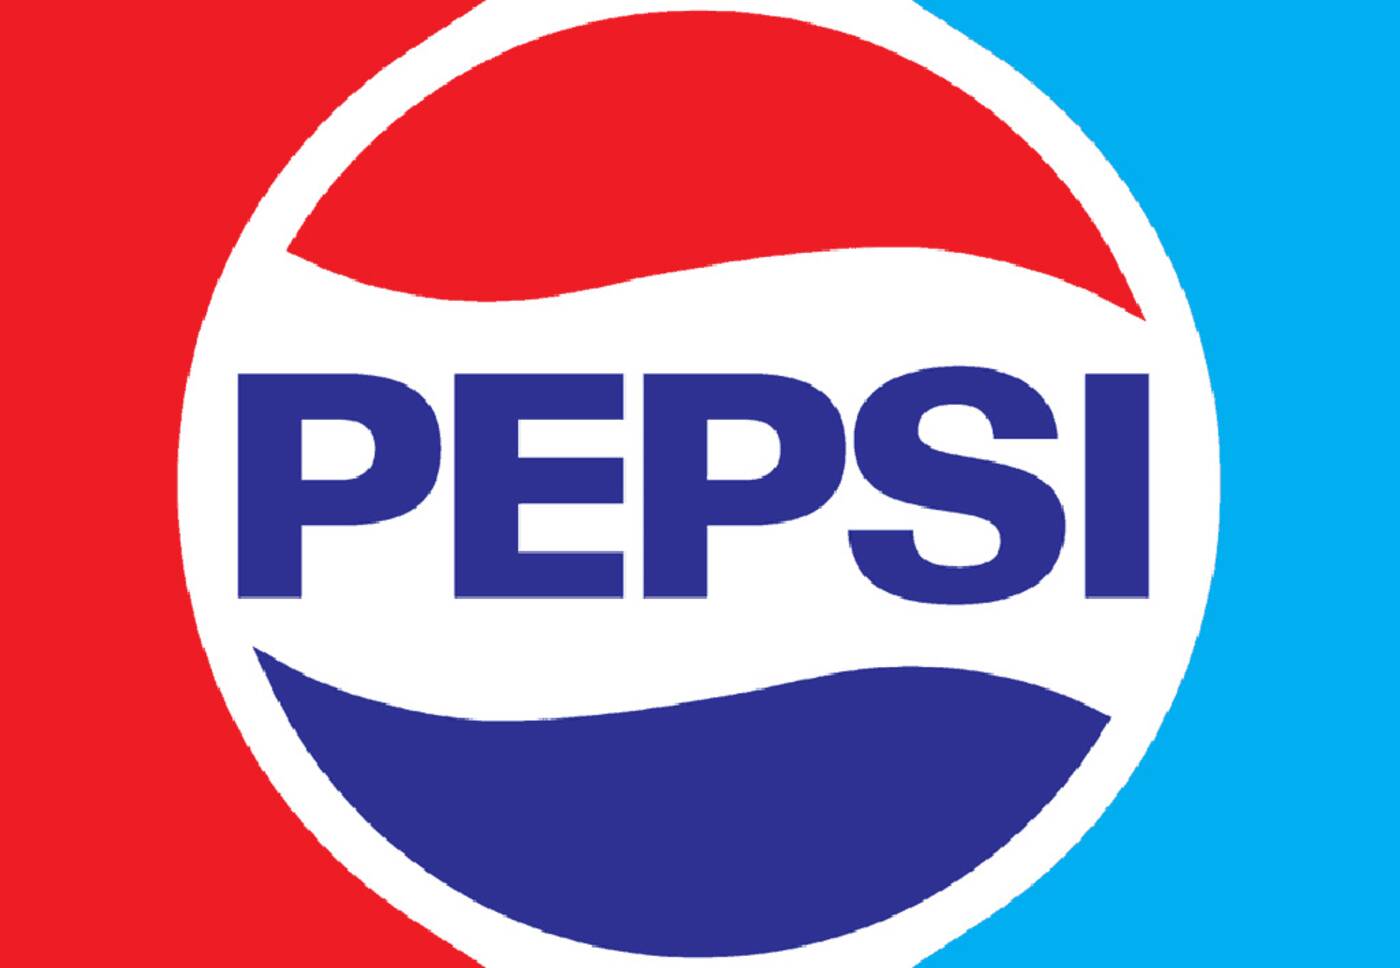 pepsi logo 1980s